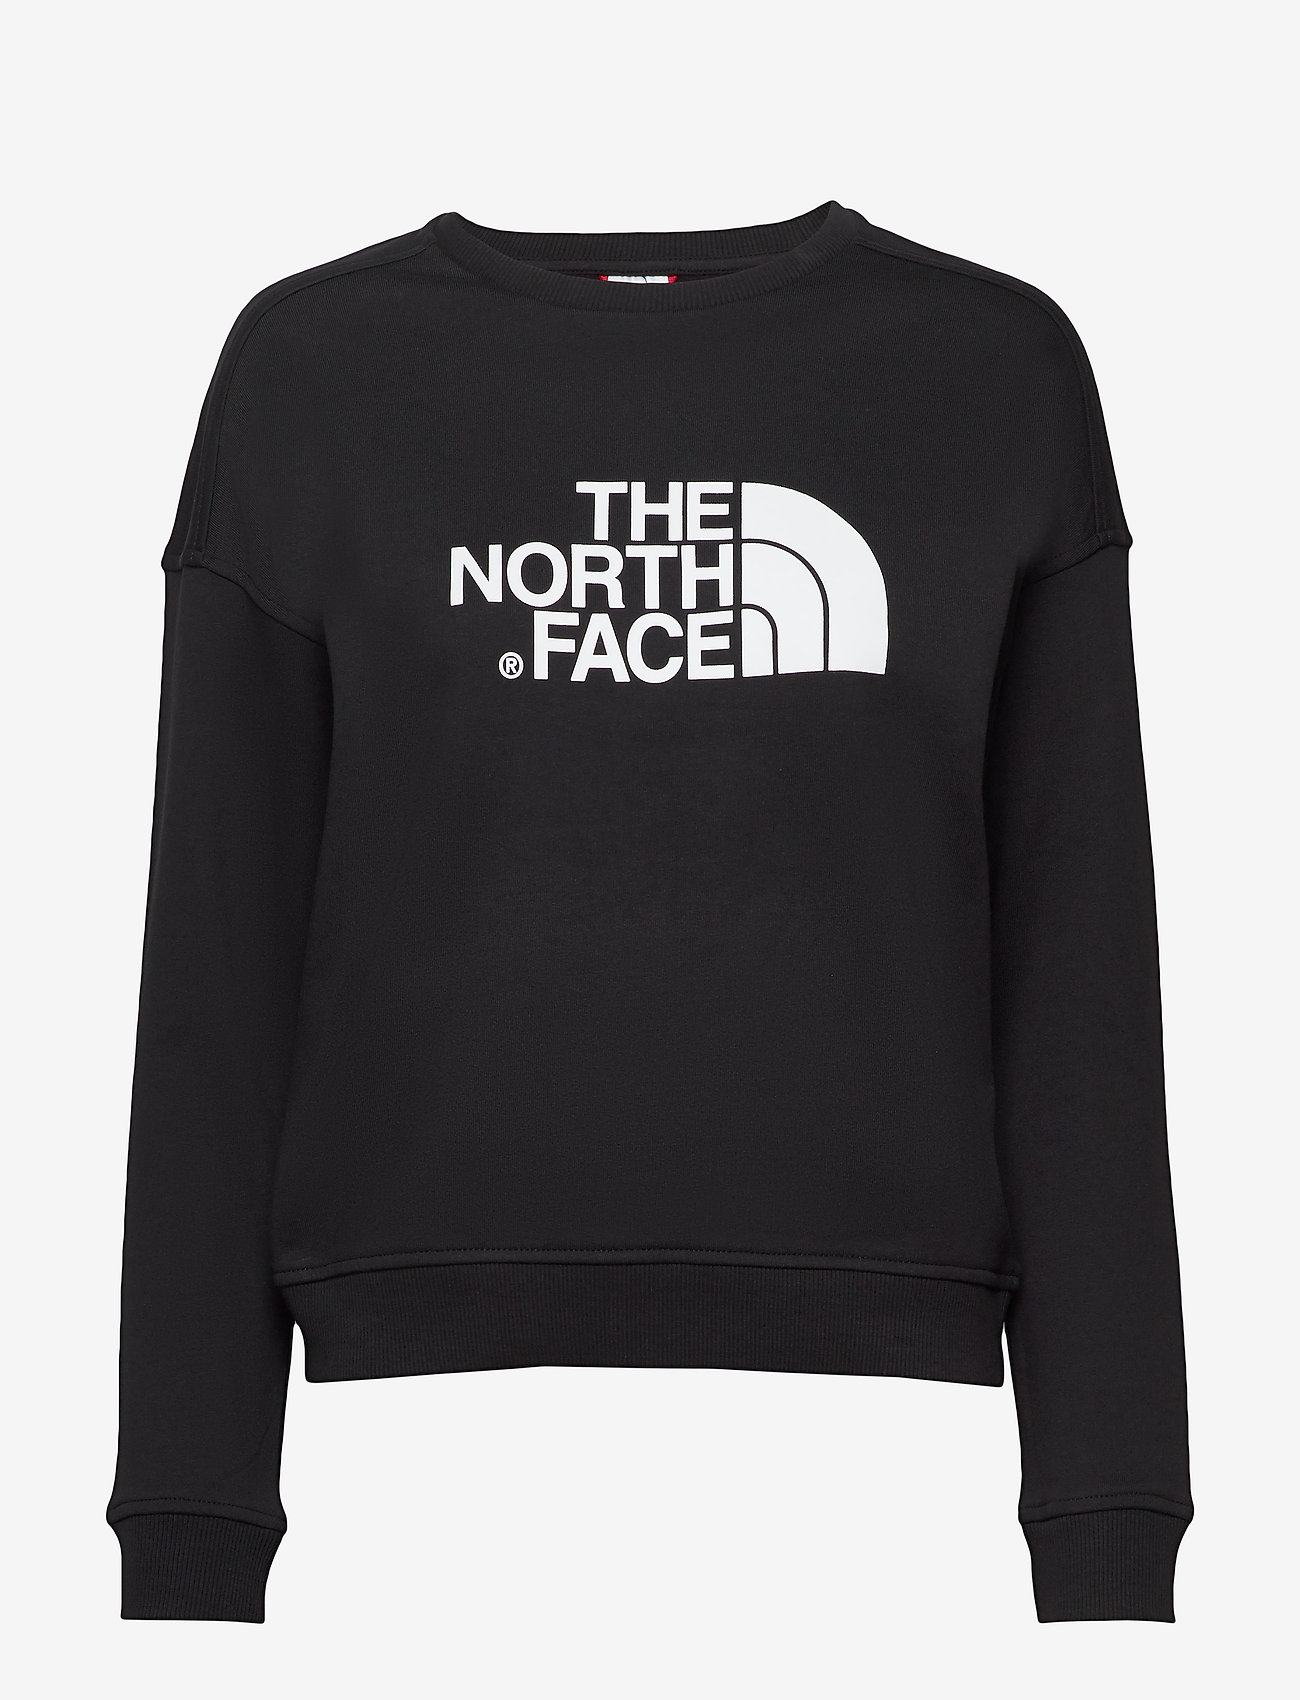 The North Face - W DREW PEAK CREW - EU - tnf black - 0